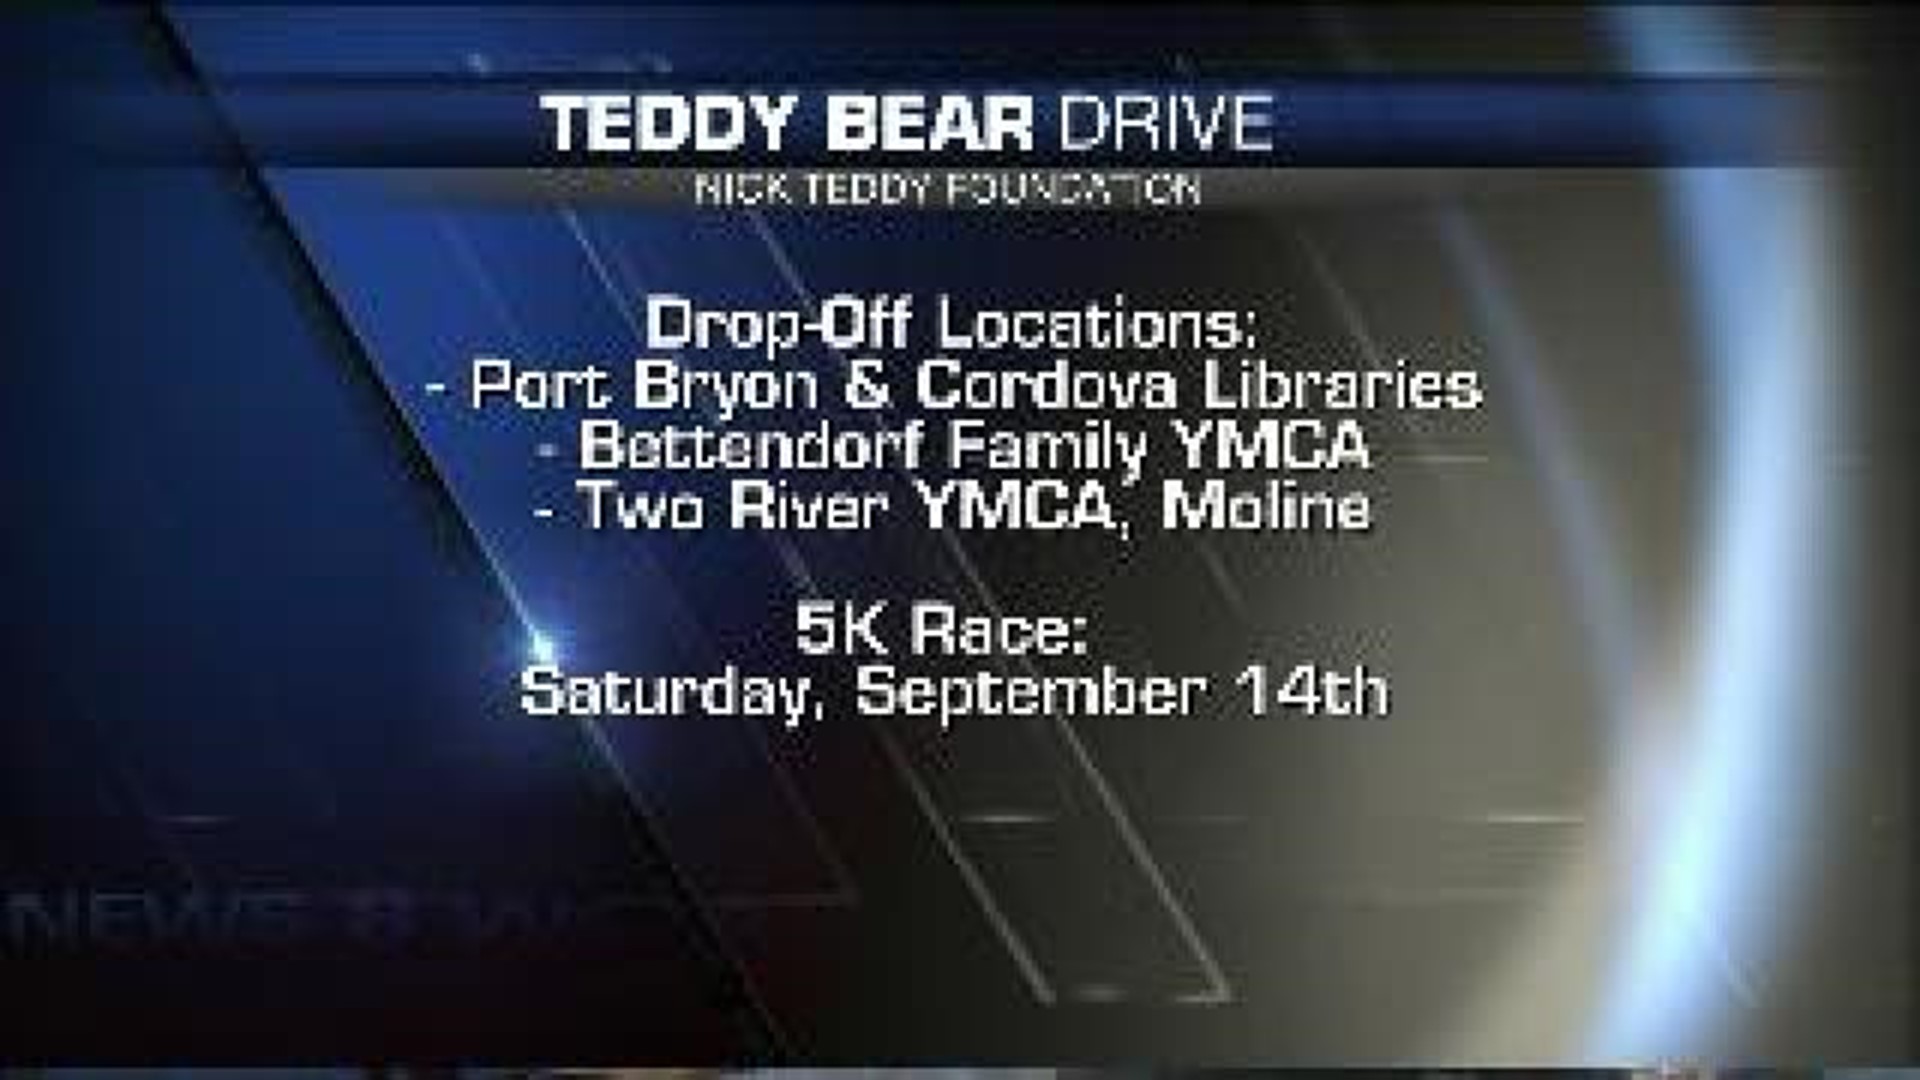 QC Organization Holds Teddy Bear Drive